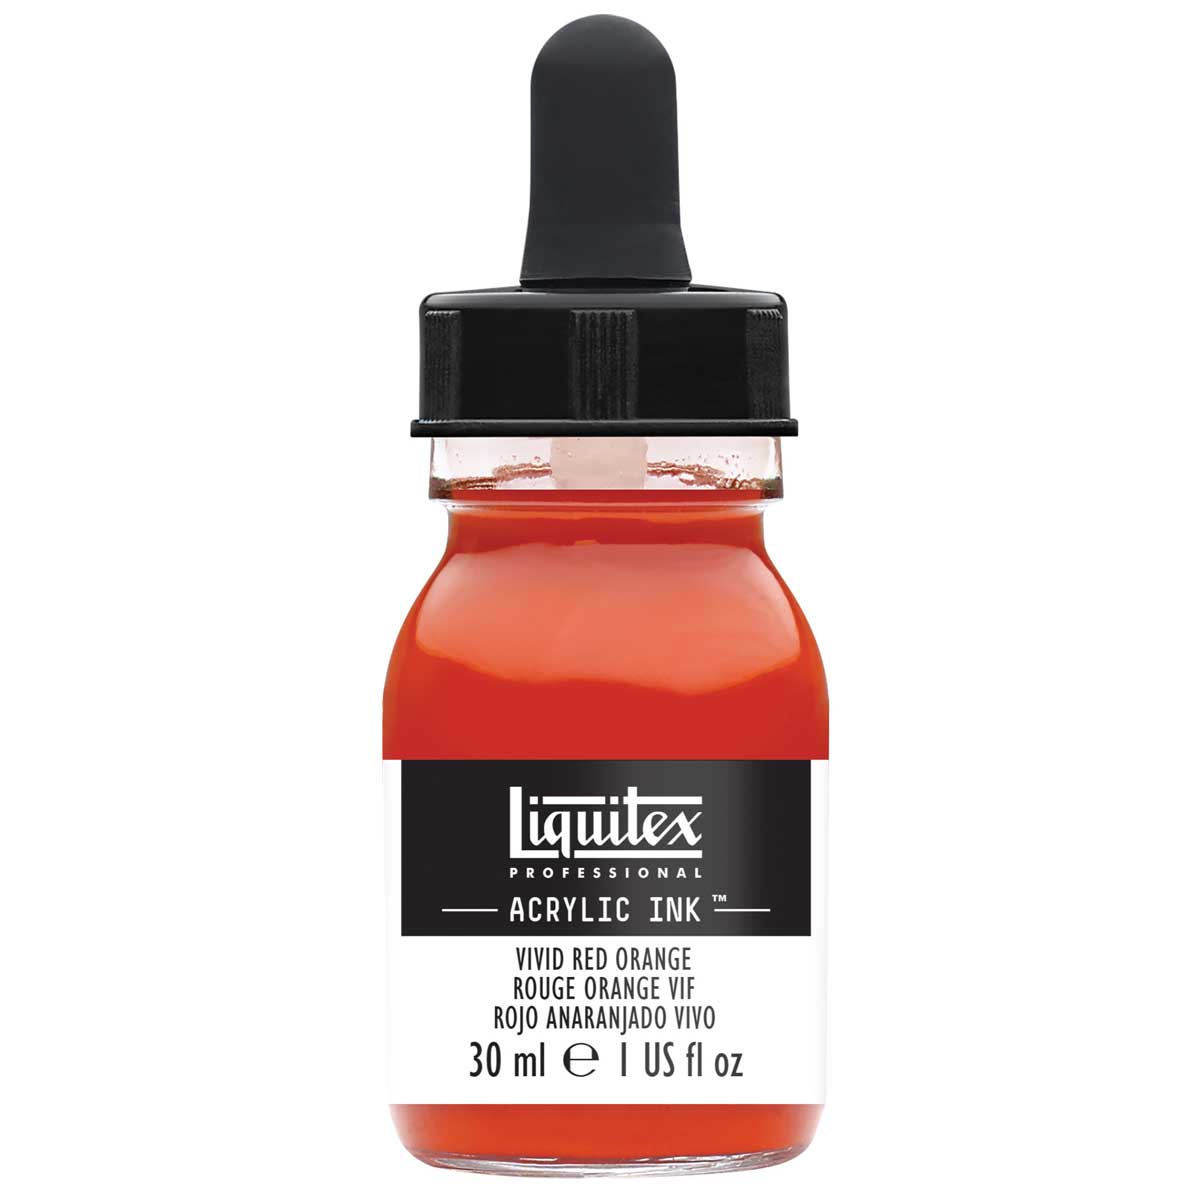 Liquitex Professional Acrylic Ink - Vivid Red Orange 30ml/1oz